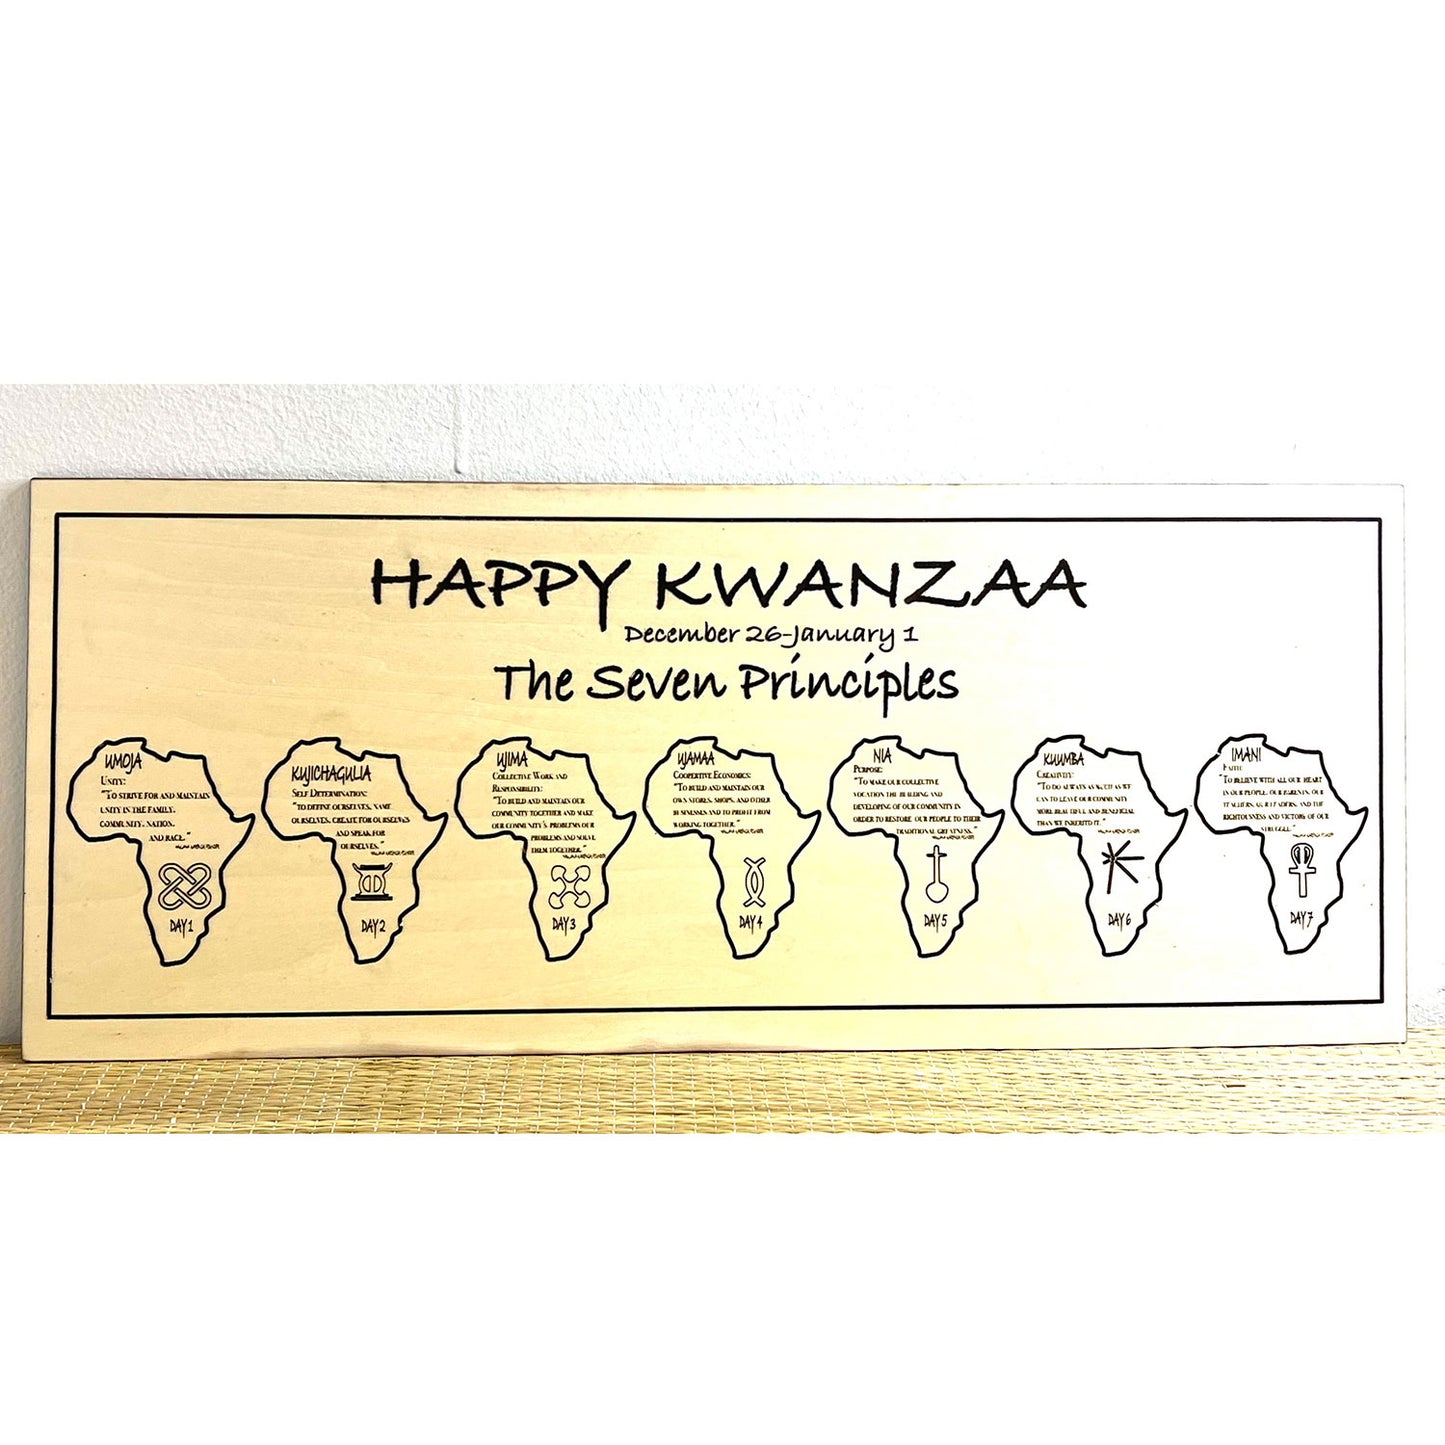 Kwanzaa Sign Plaque